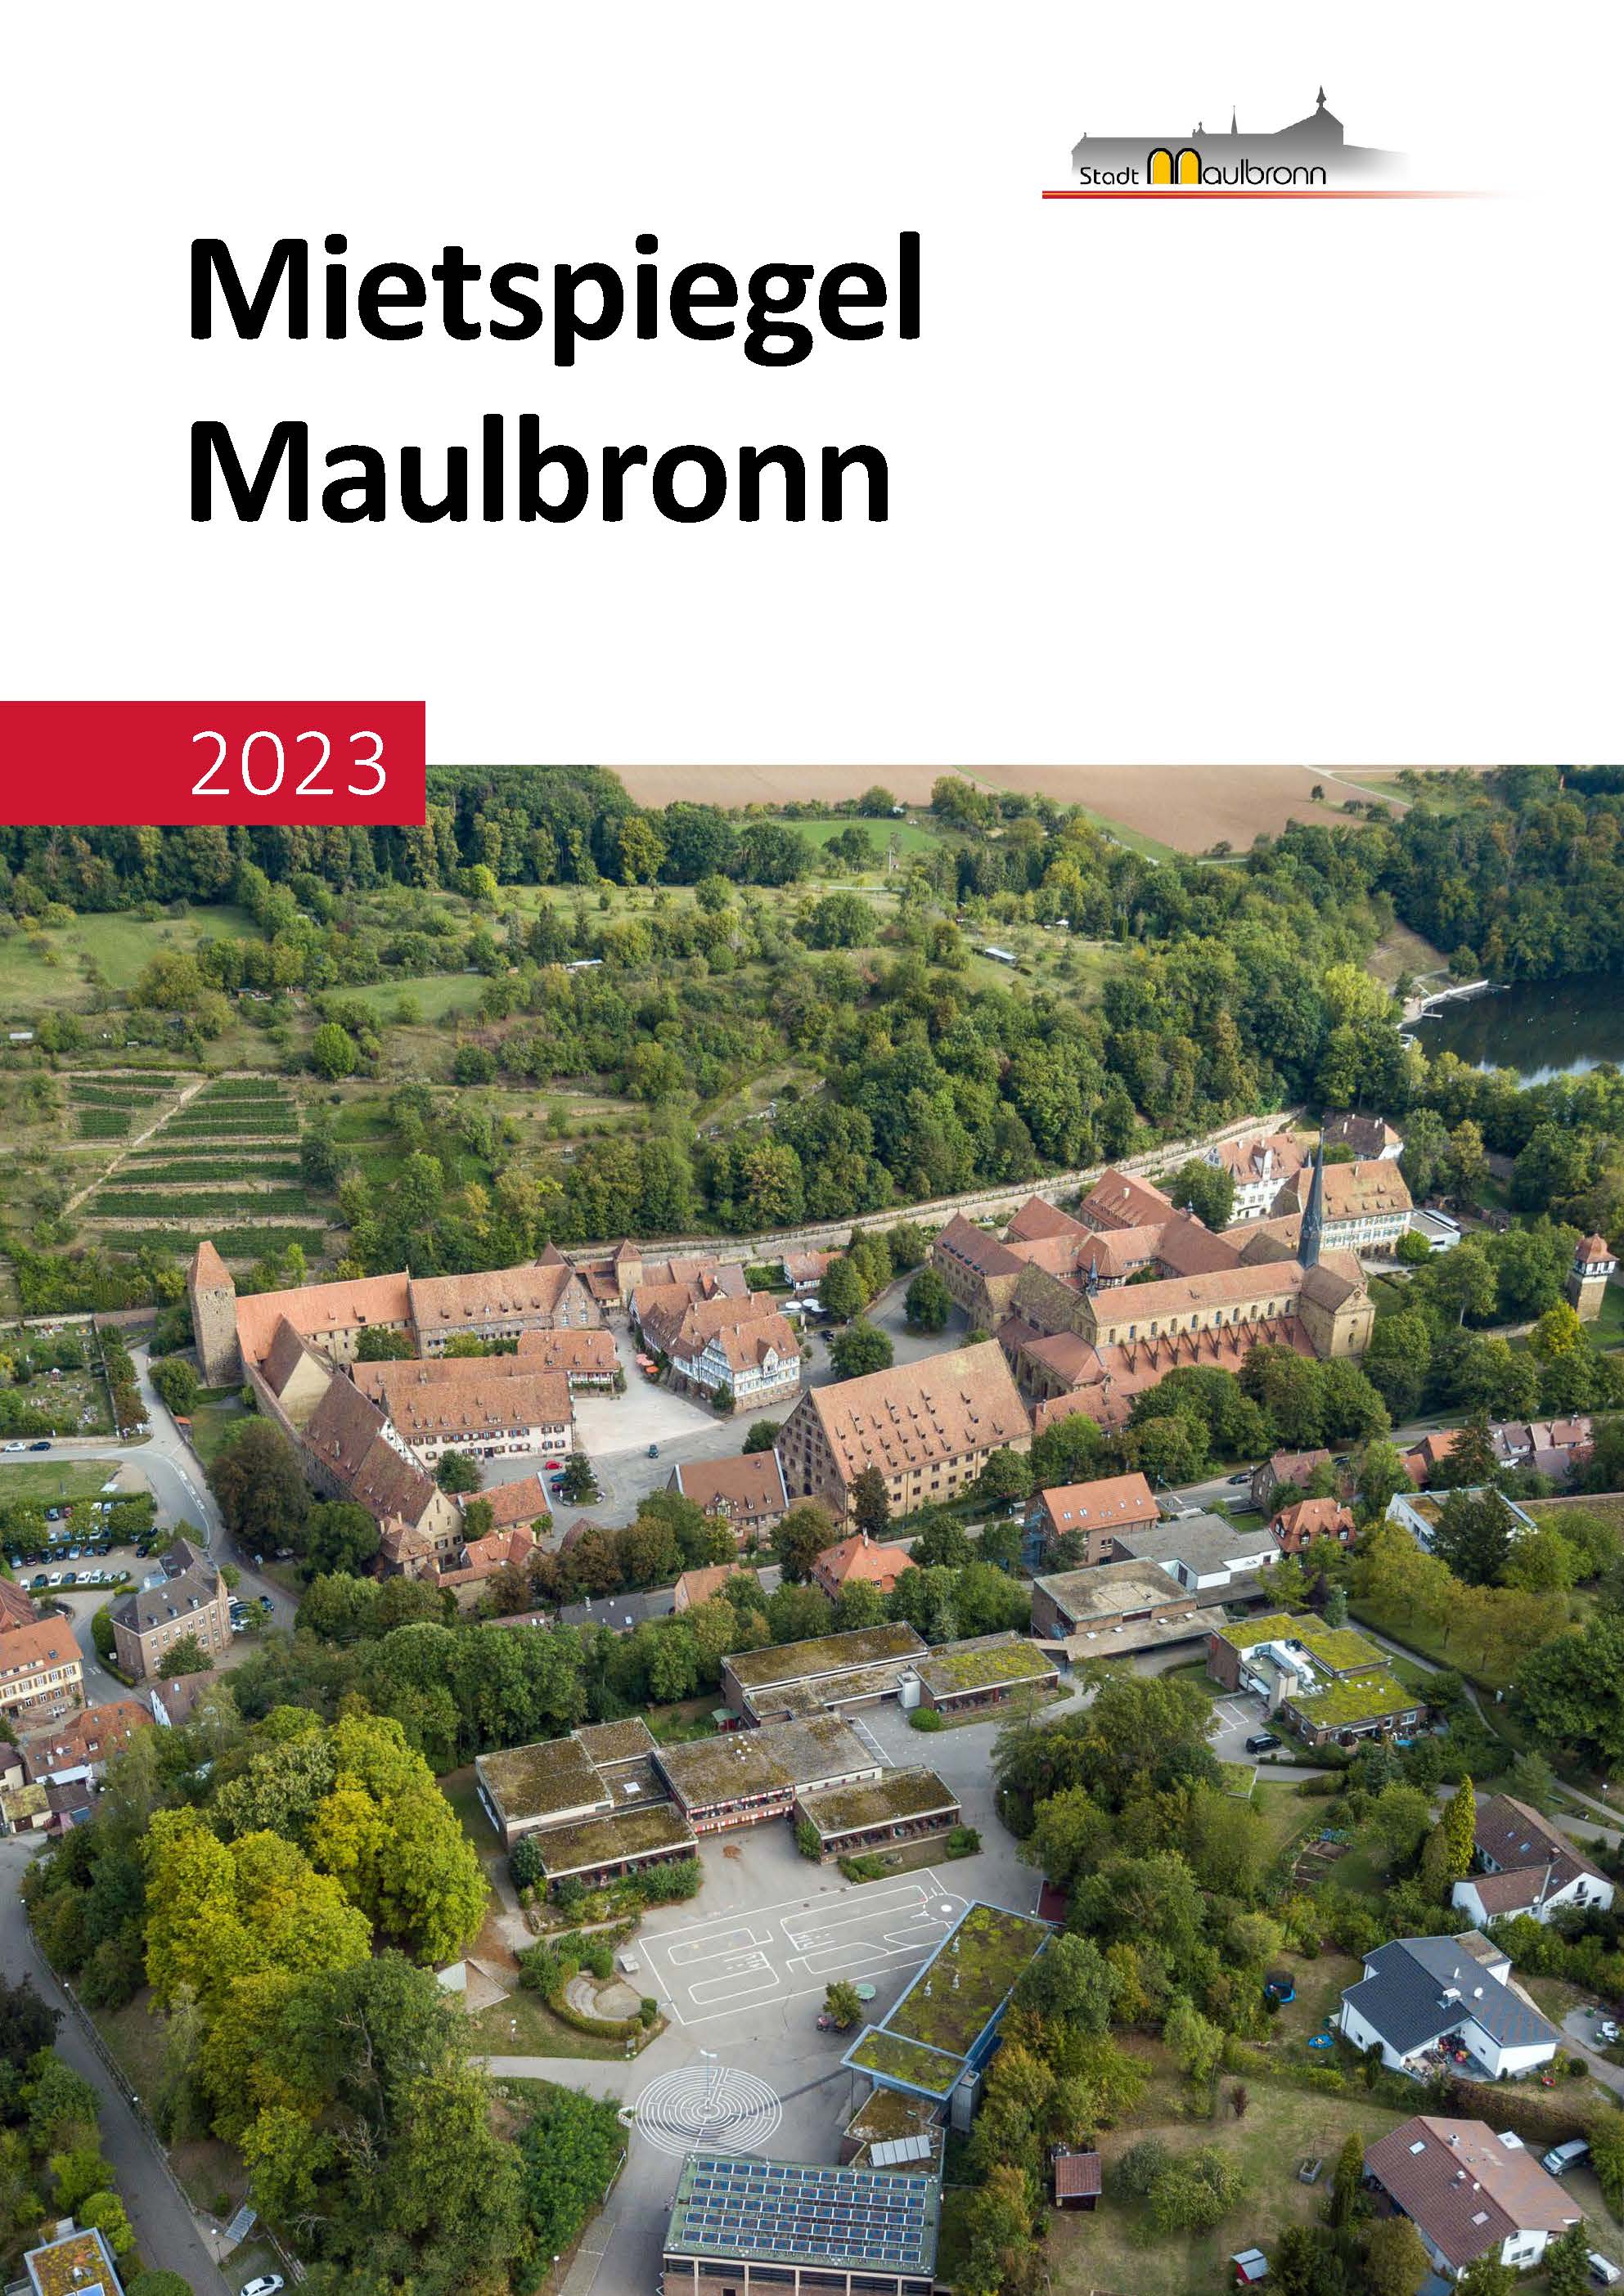 Luftbild der Stadt Maulbronn mit Titel Mietspiegel Maulbronn